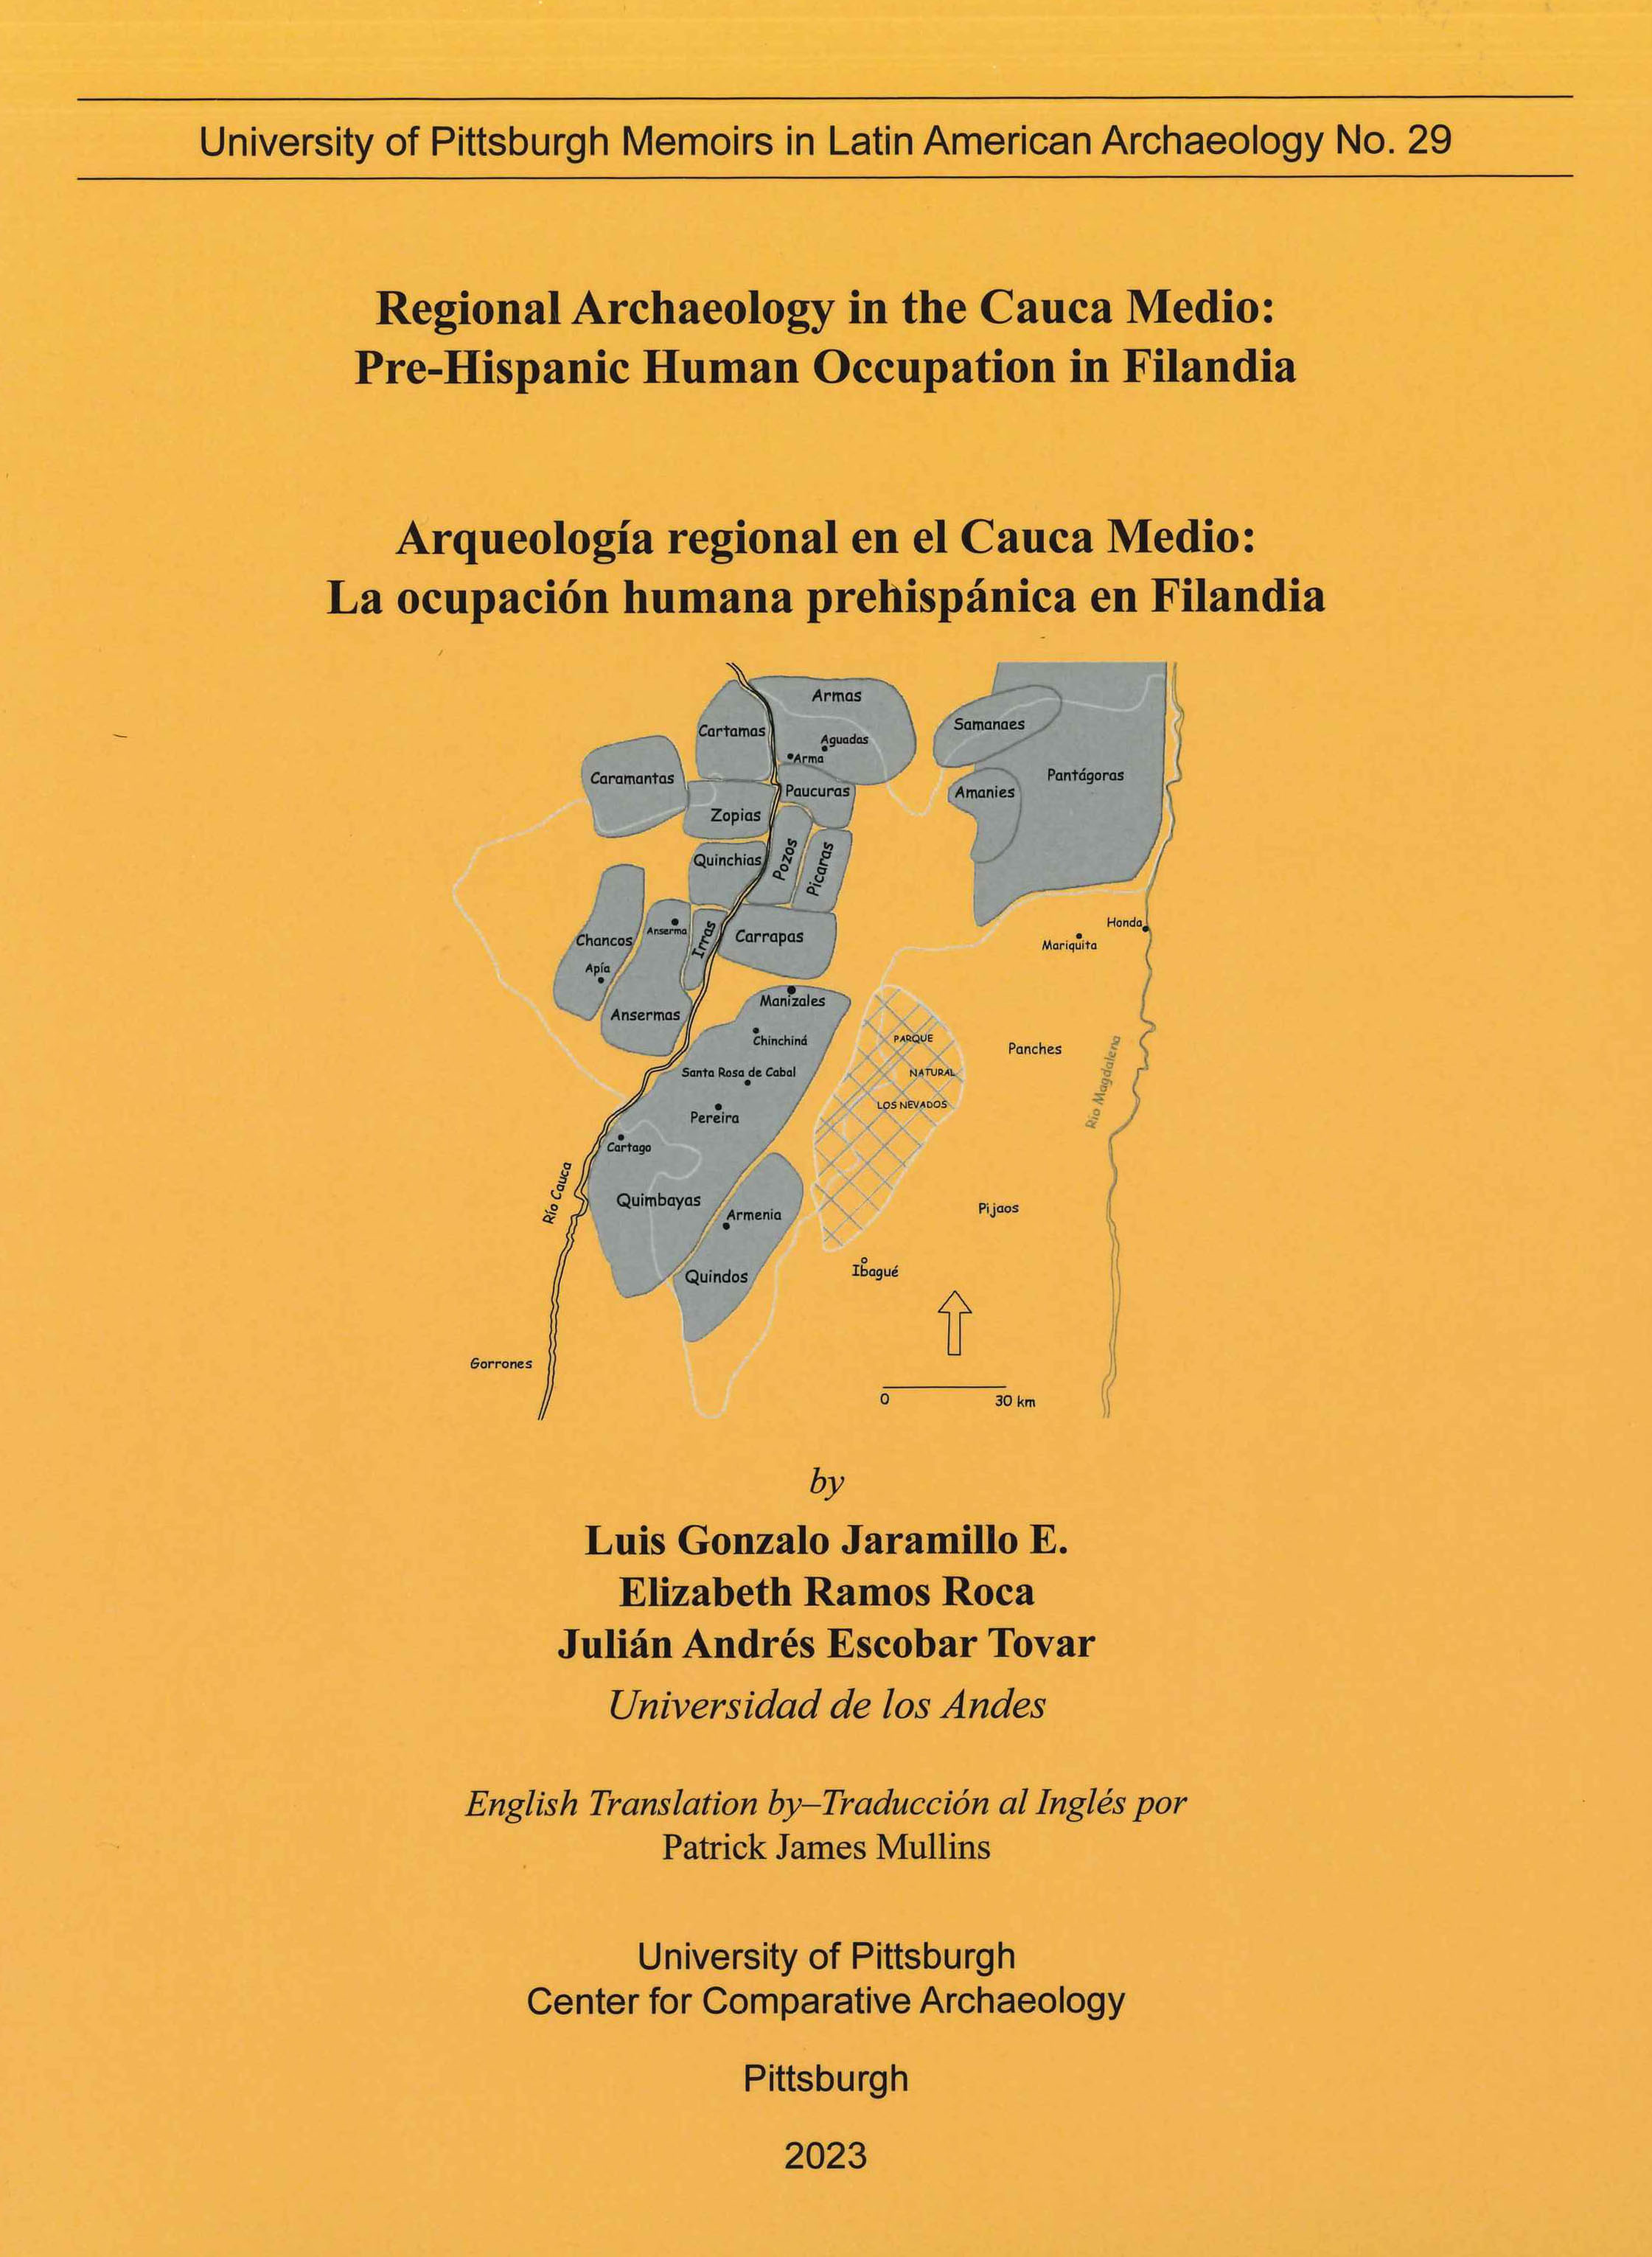 Multiscalar analysis of Barranca Village cover